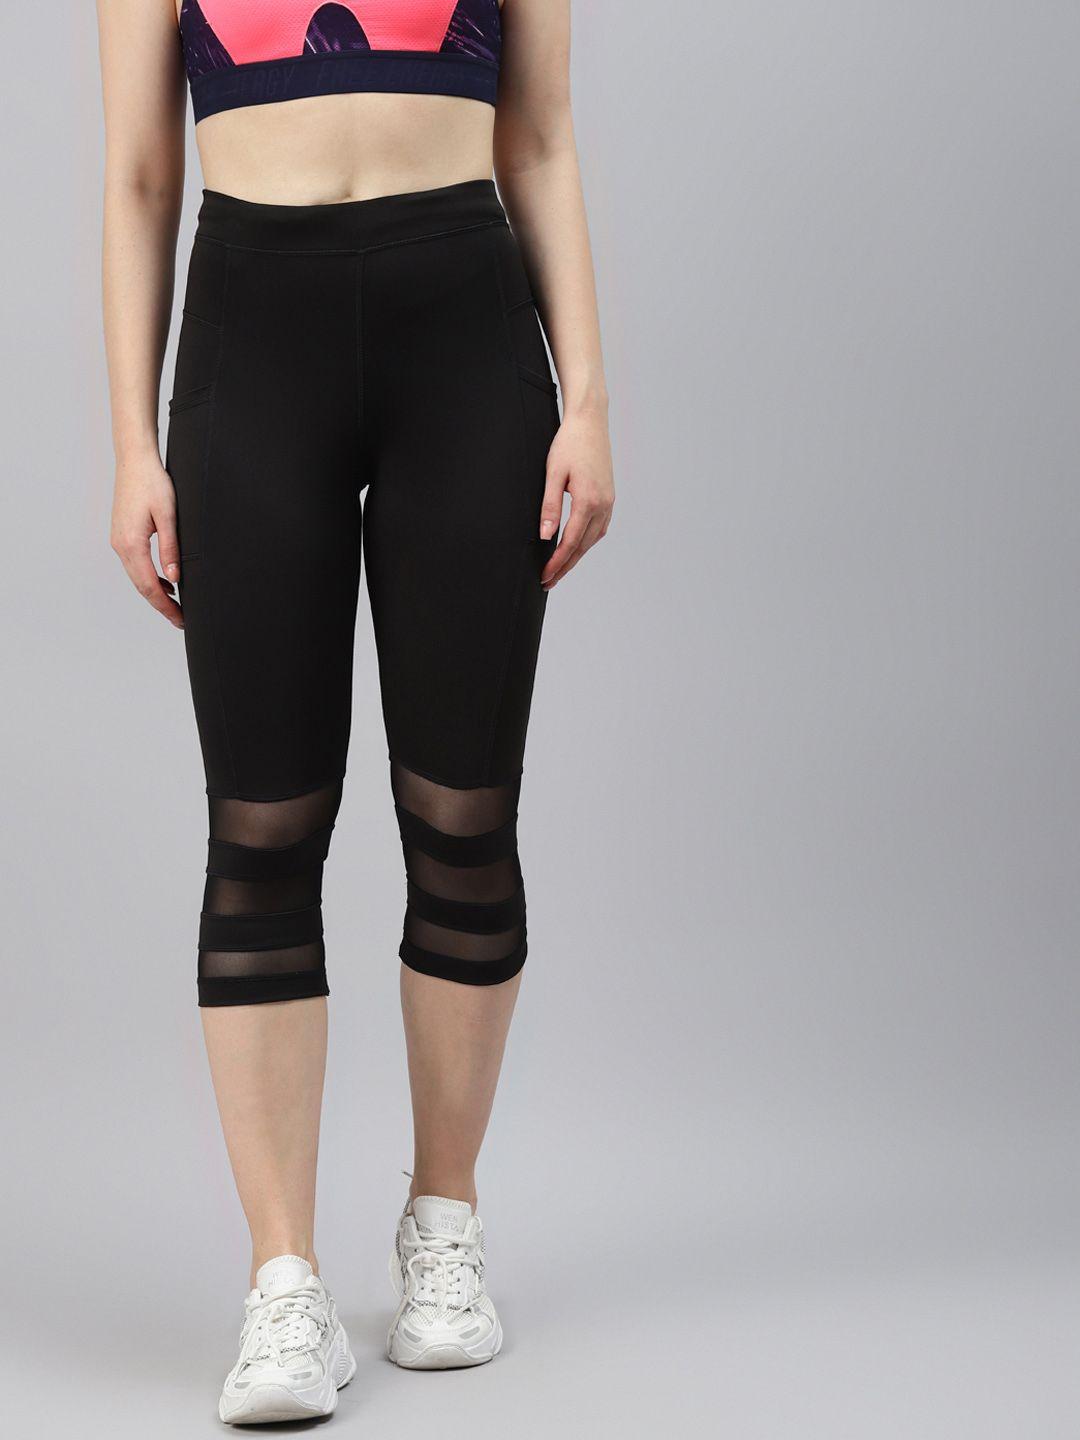 blinkin women black 3/4th high waist training tights with mesh panels & side pockets